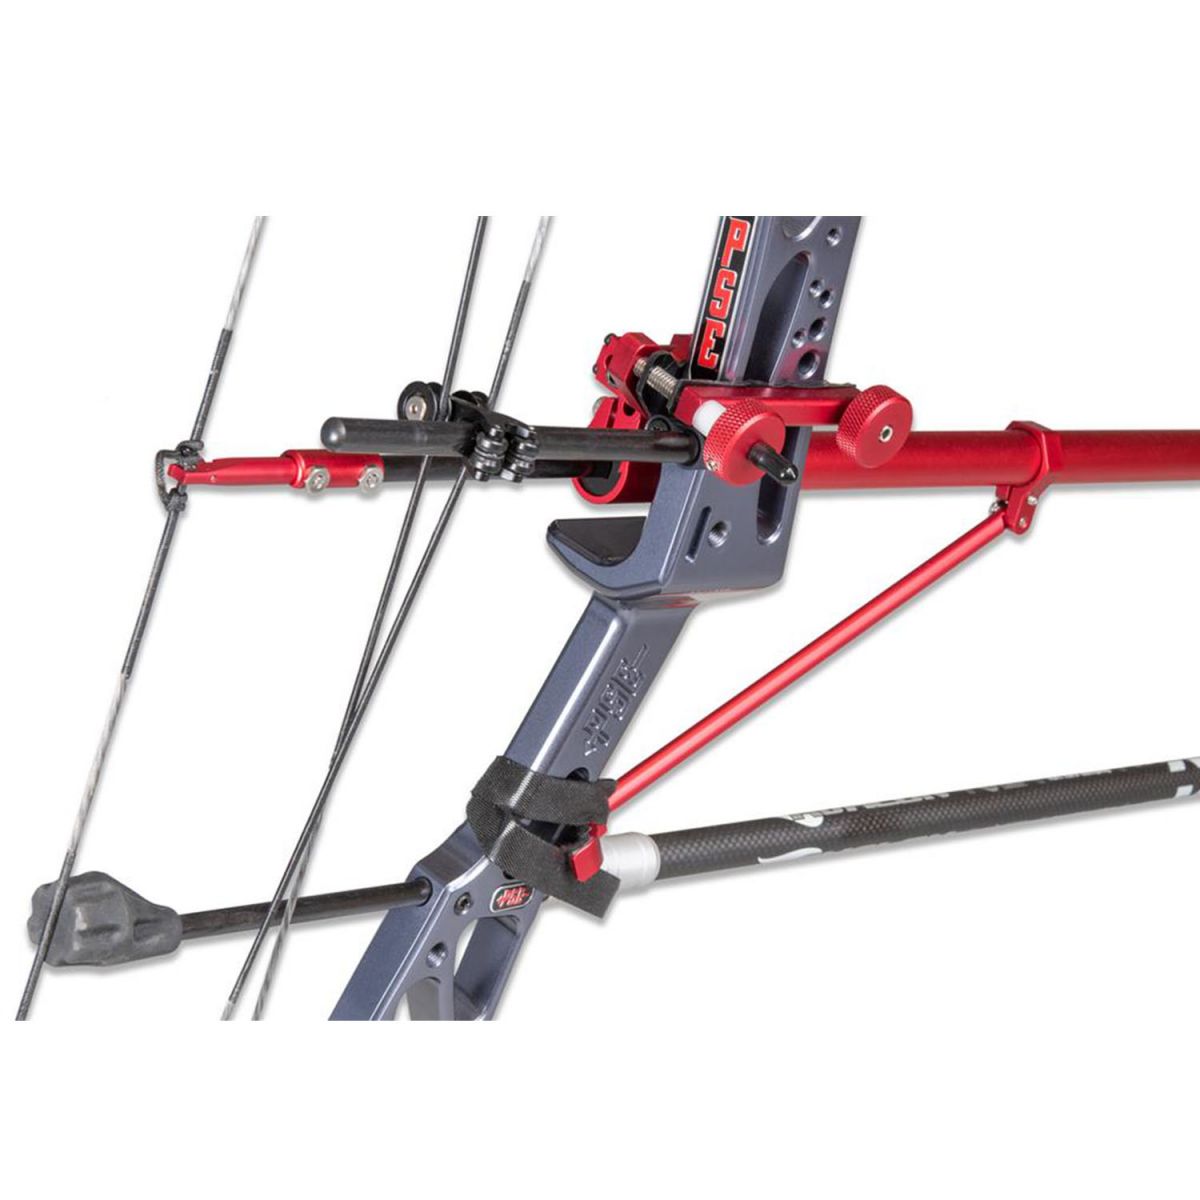 KIS Archery Compound Schusstrainer Pro